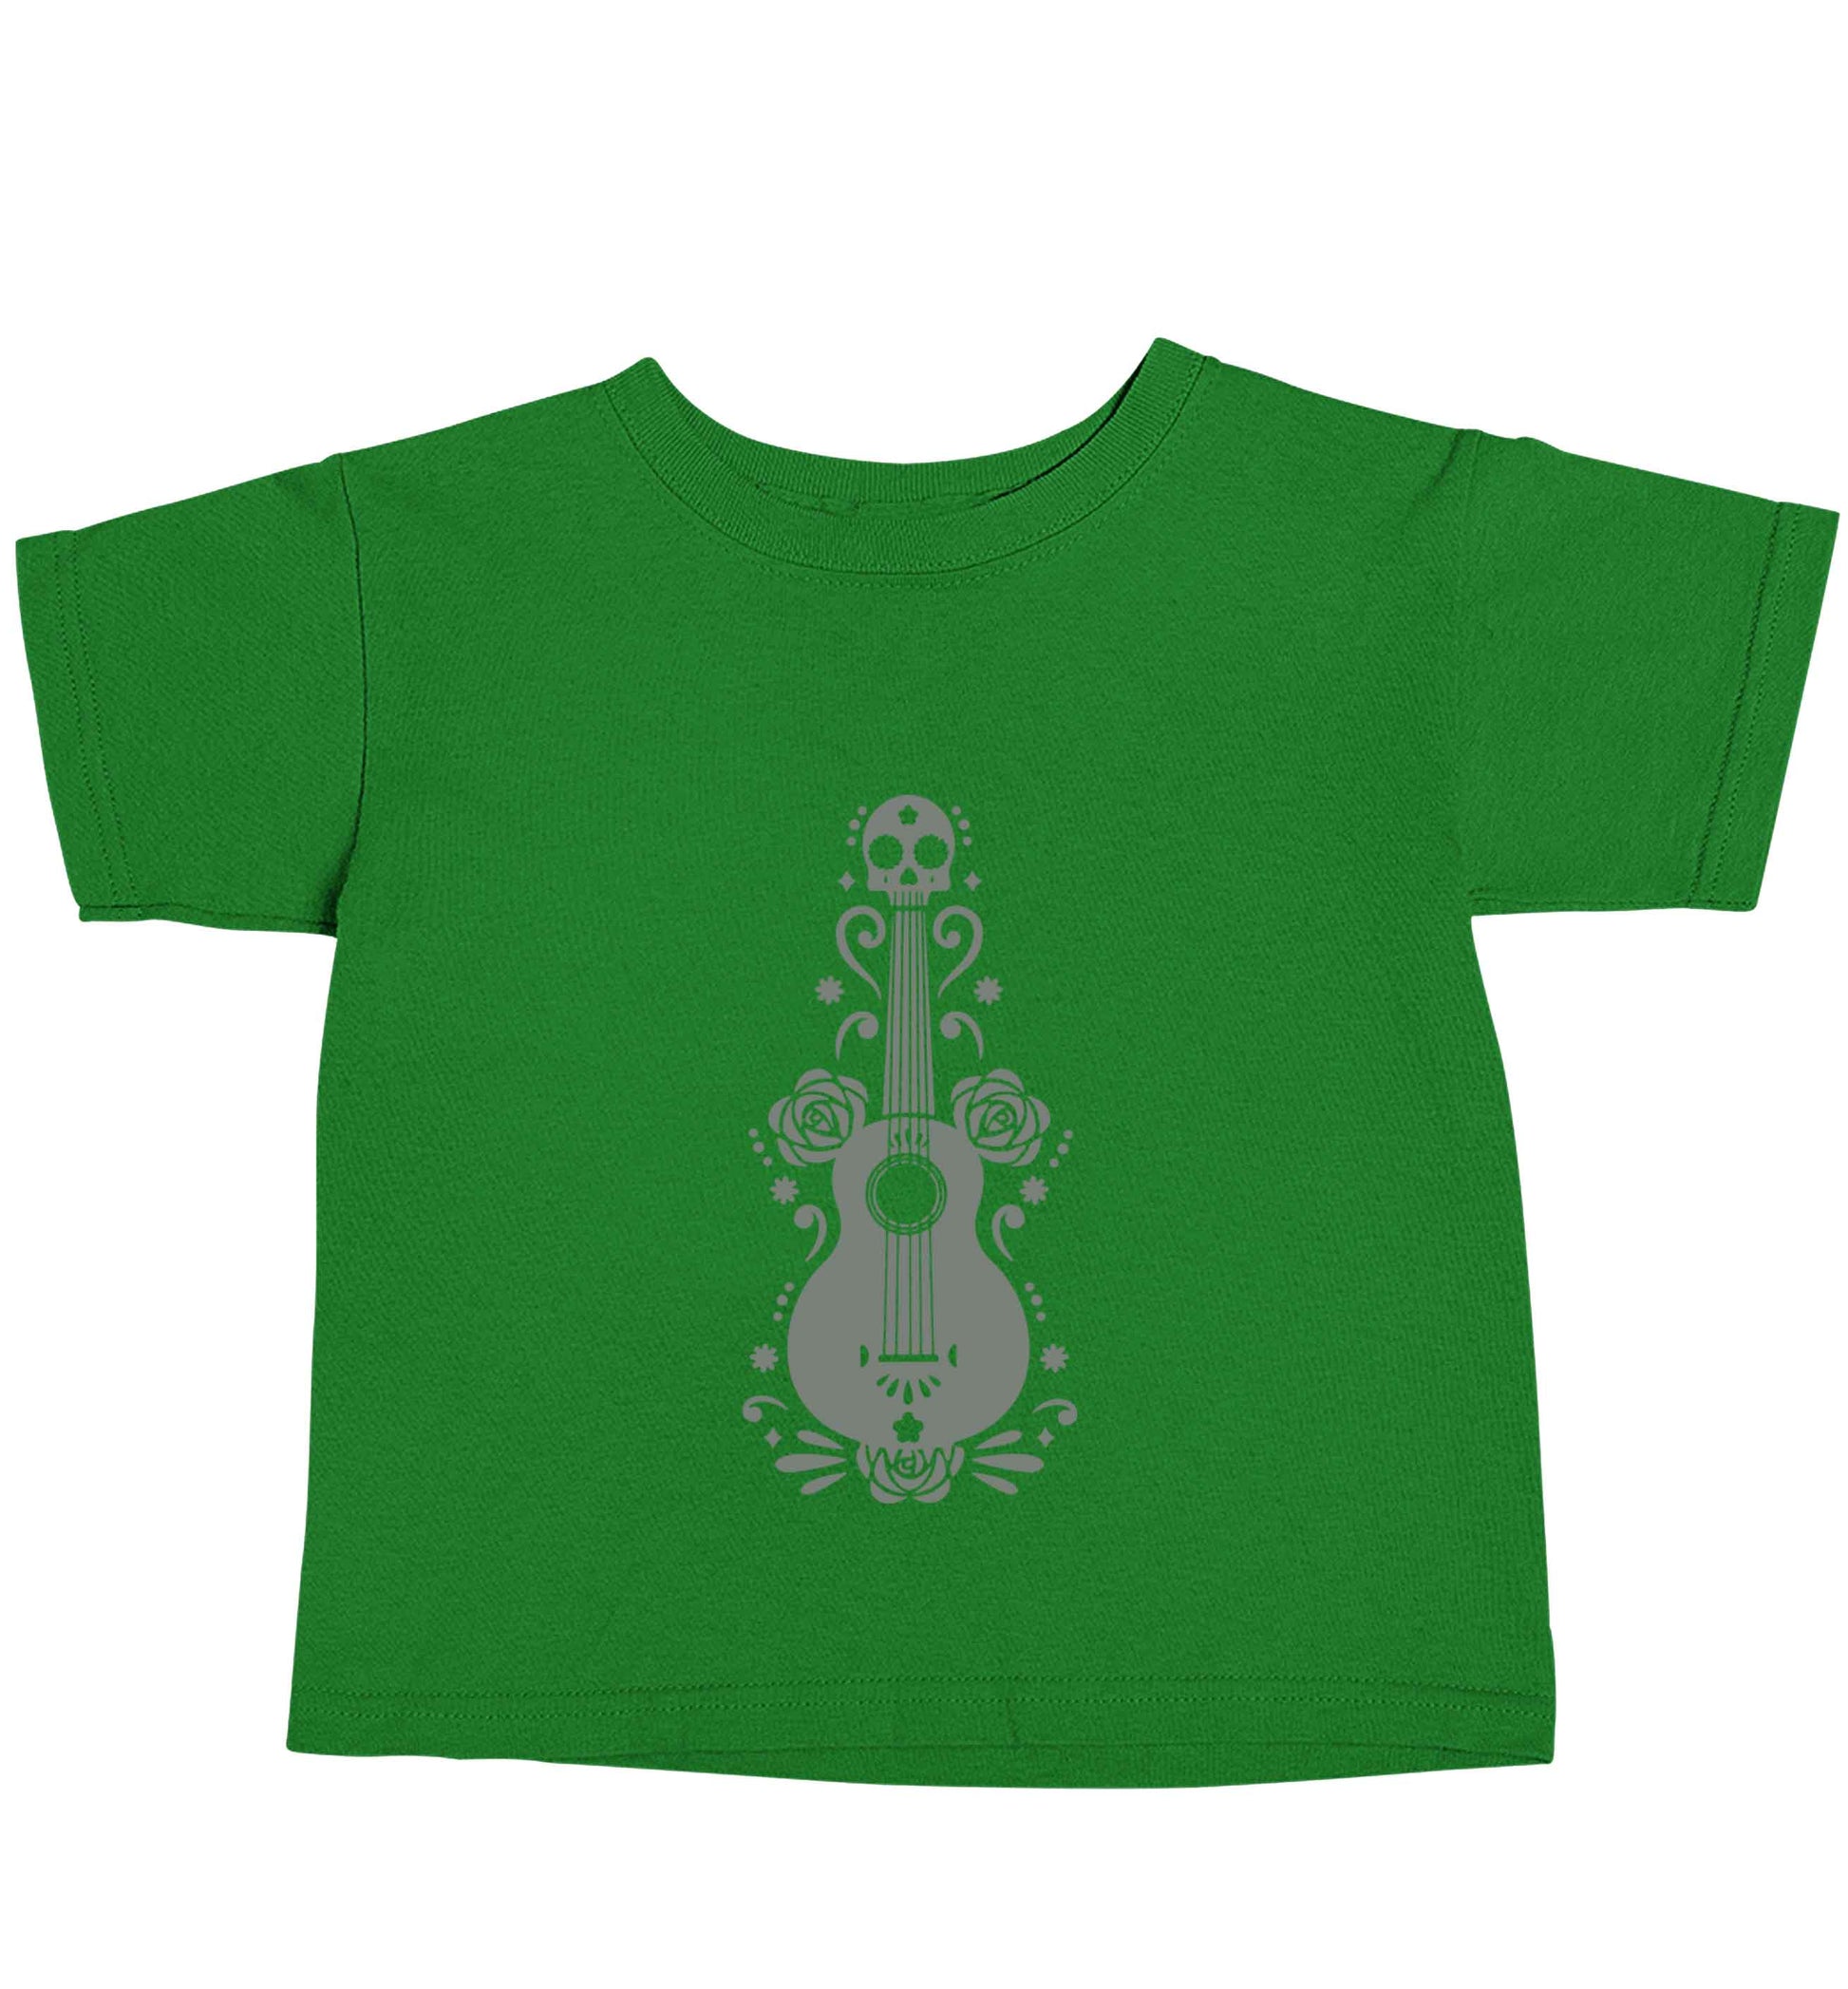 Guitar skull illustration green baby toddler Tshirt 2 Years